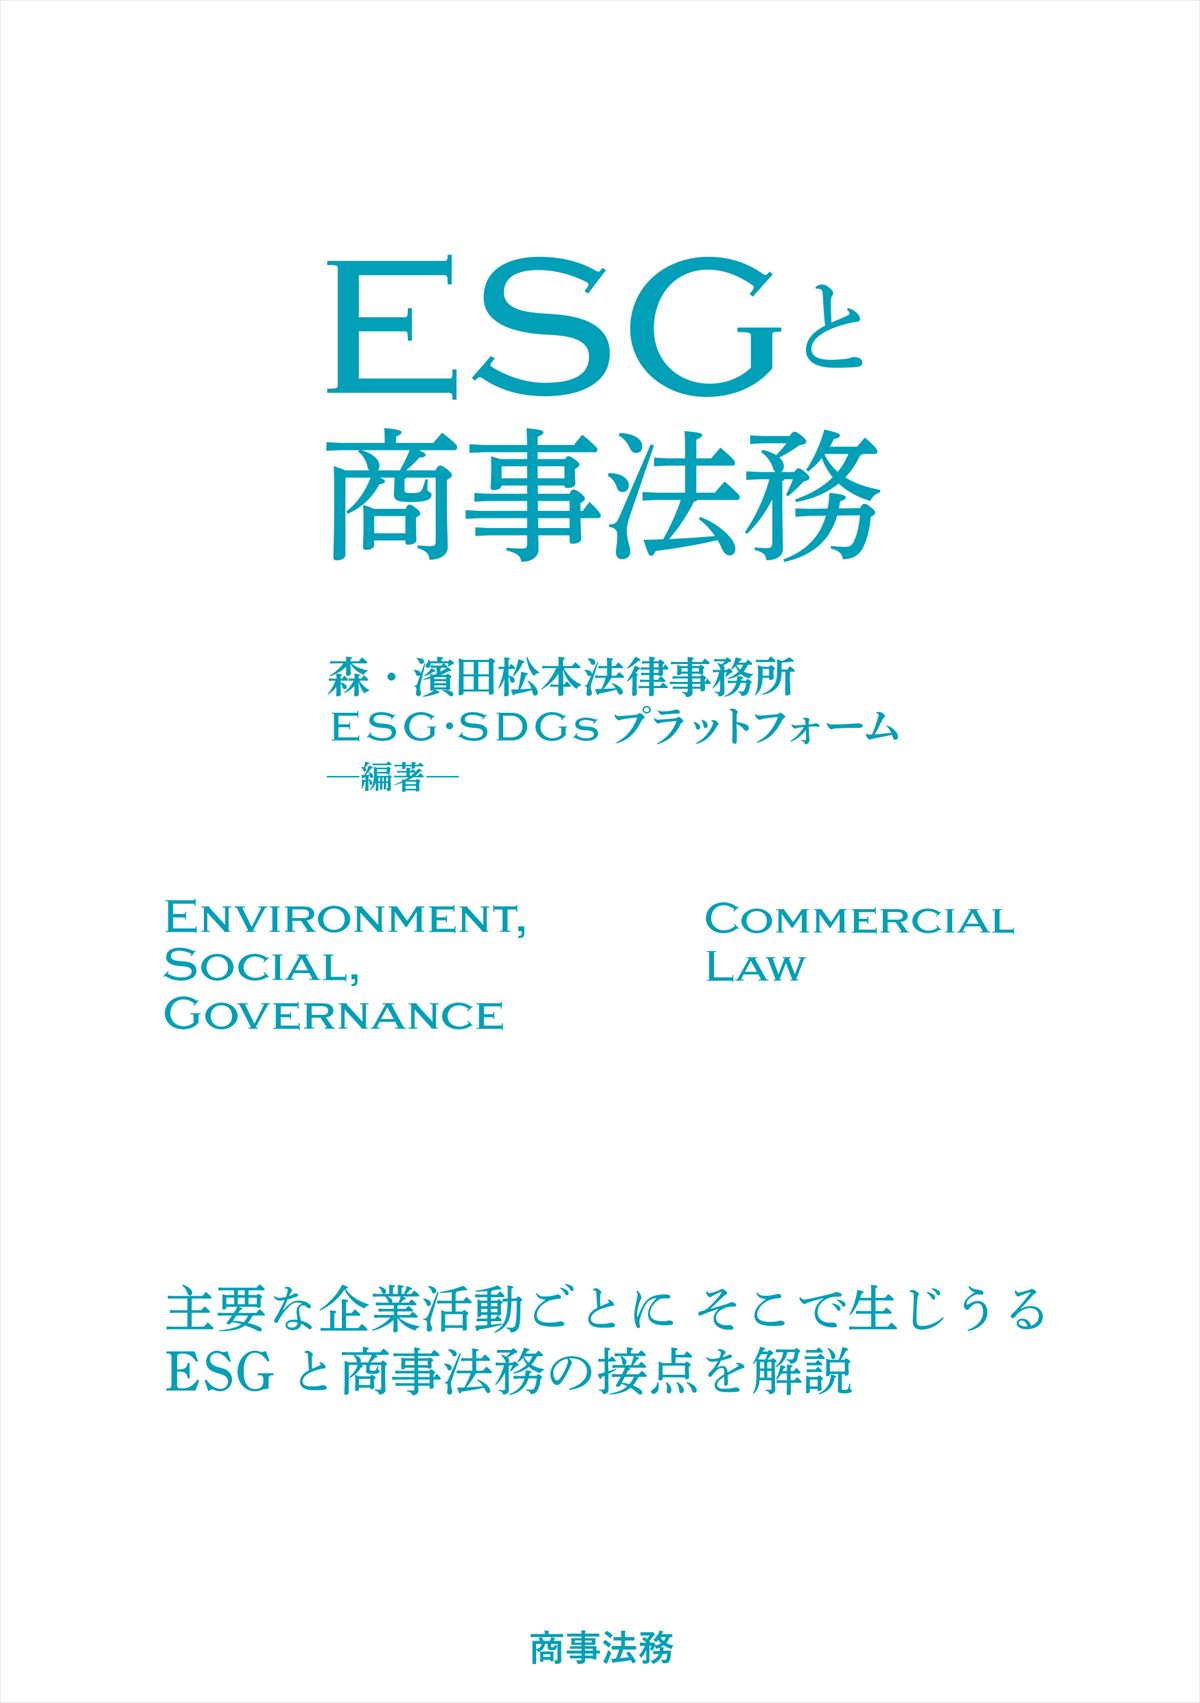 ESGと商事法務の商品画像